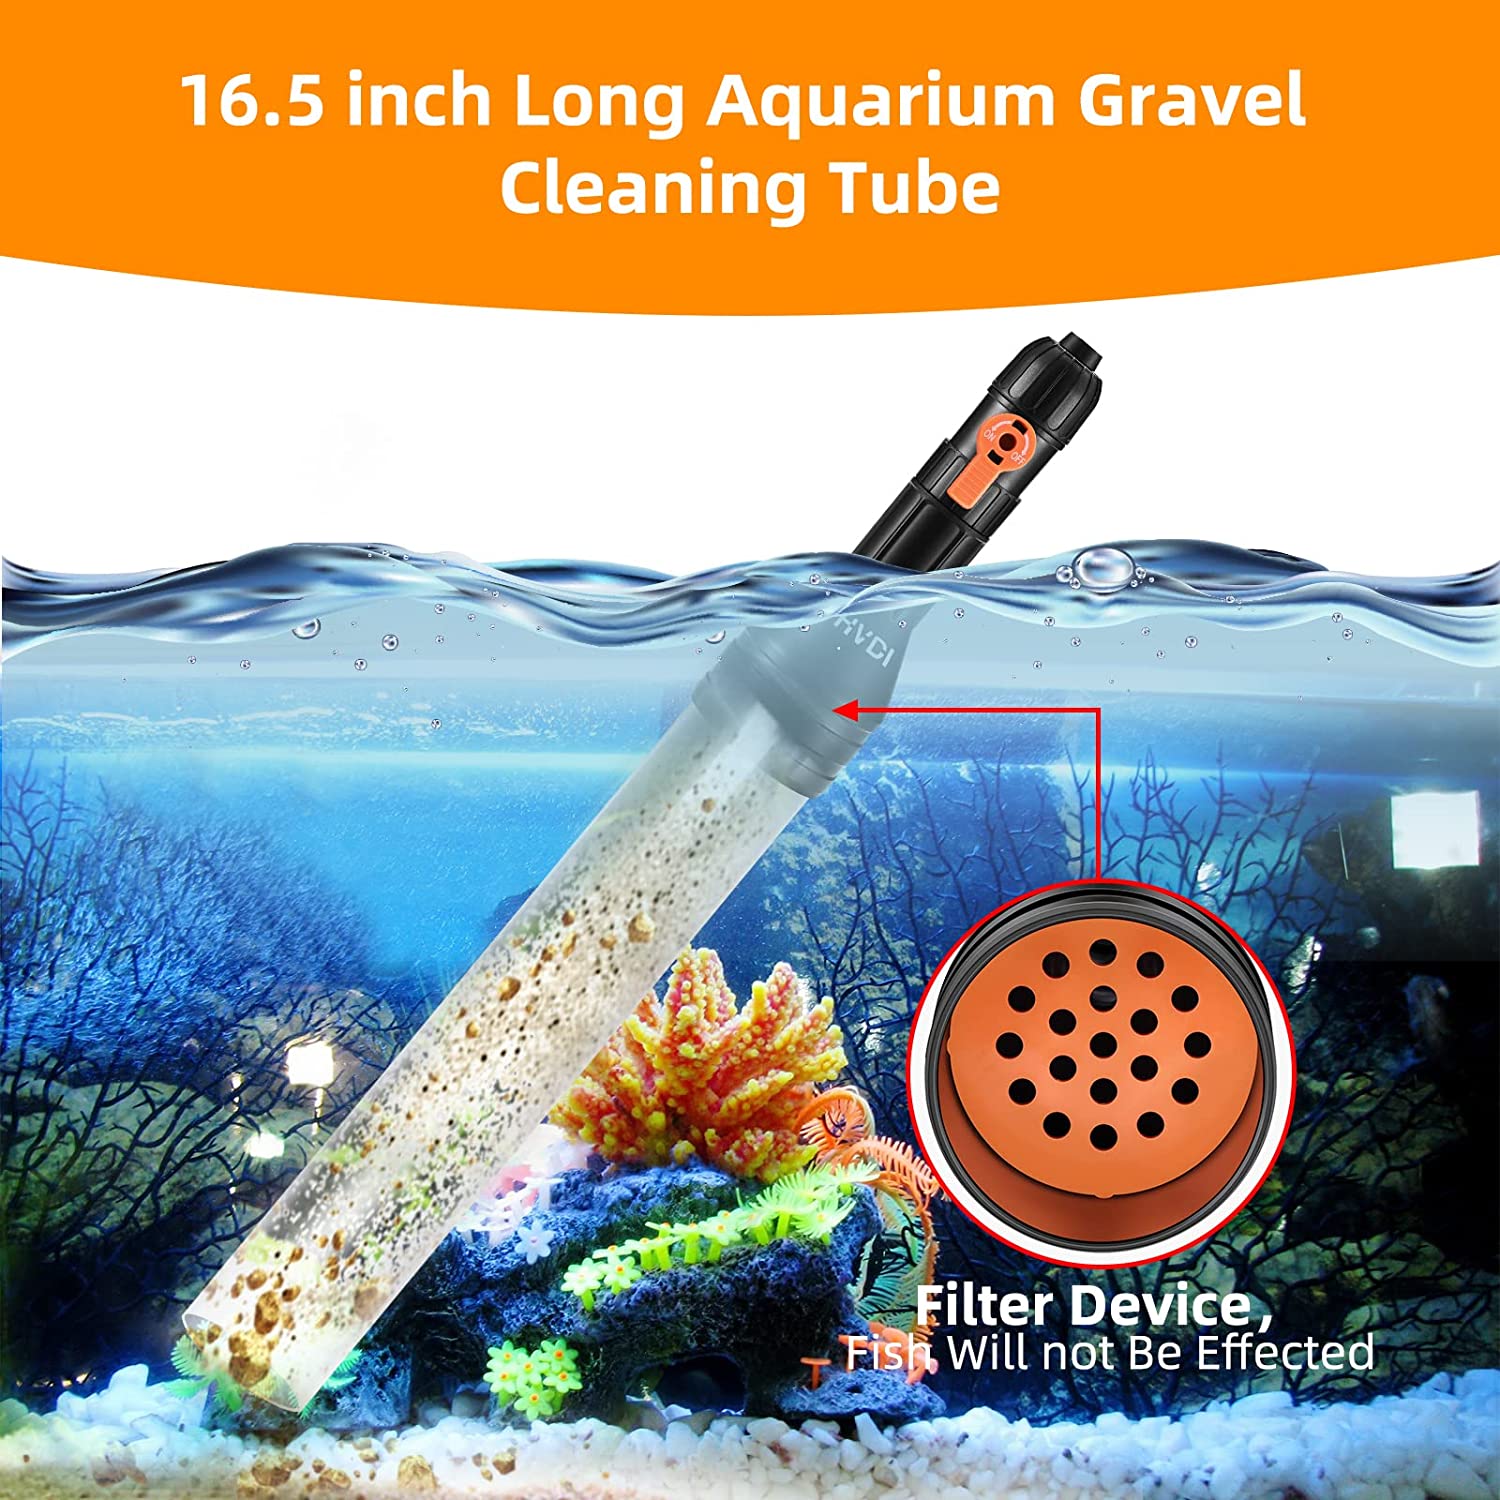 Piosoo Aquarium Water Changer Kit, Automatic Vacuum Siphon Fish Tank Gravel Cleaner Tube - Universal Quick Pump Aquarium Water Changing and Filter Tool